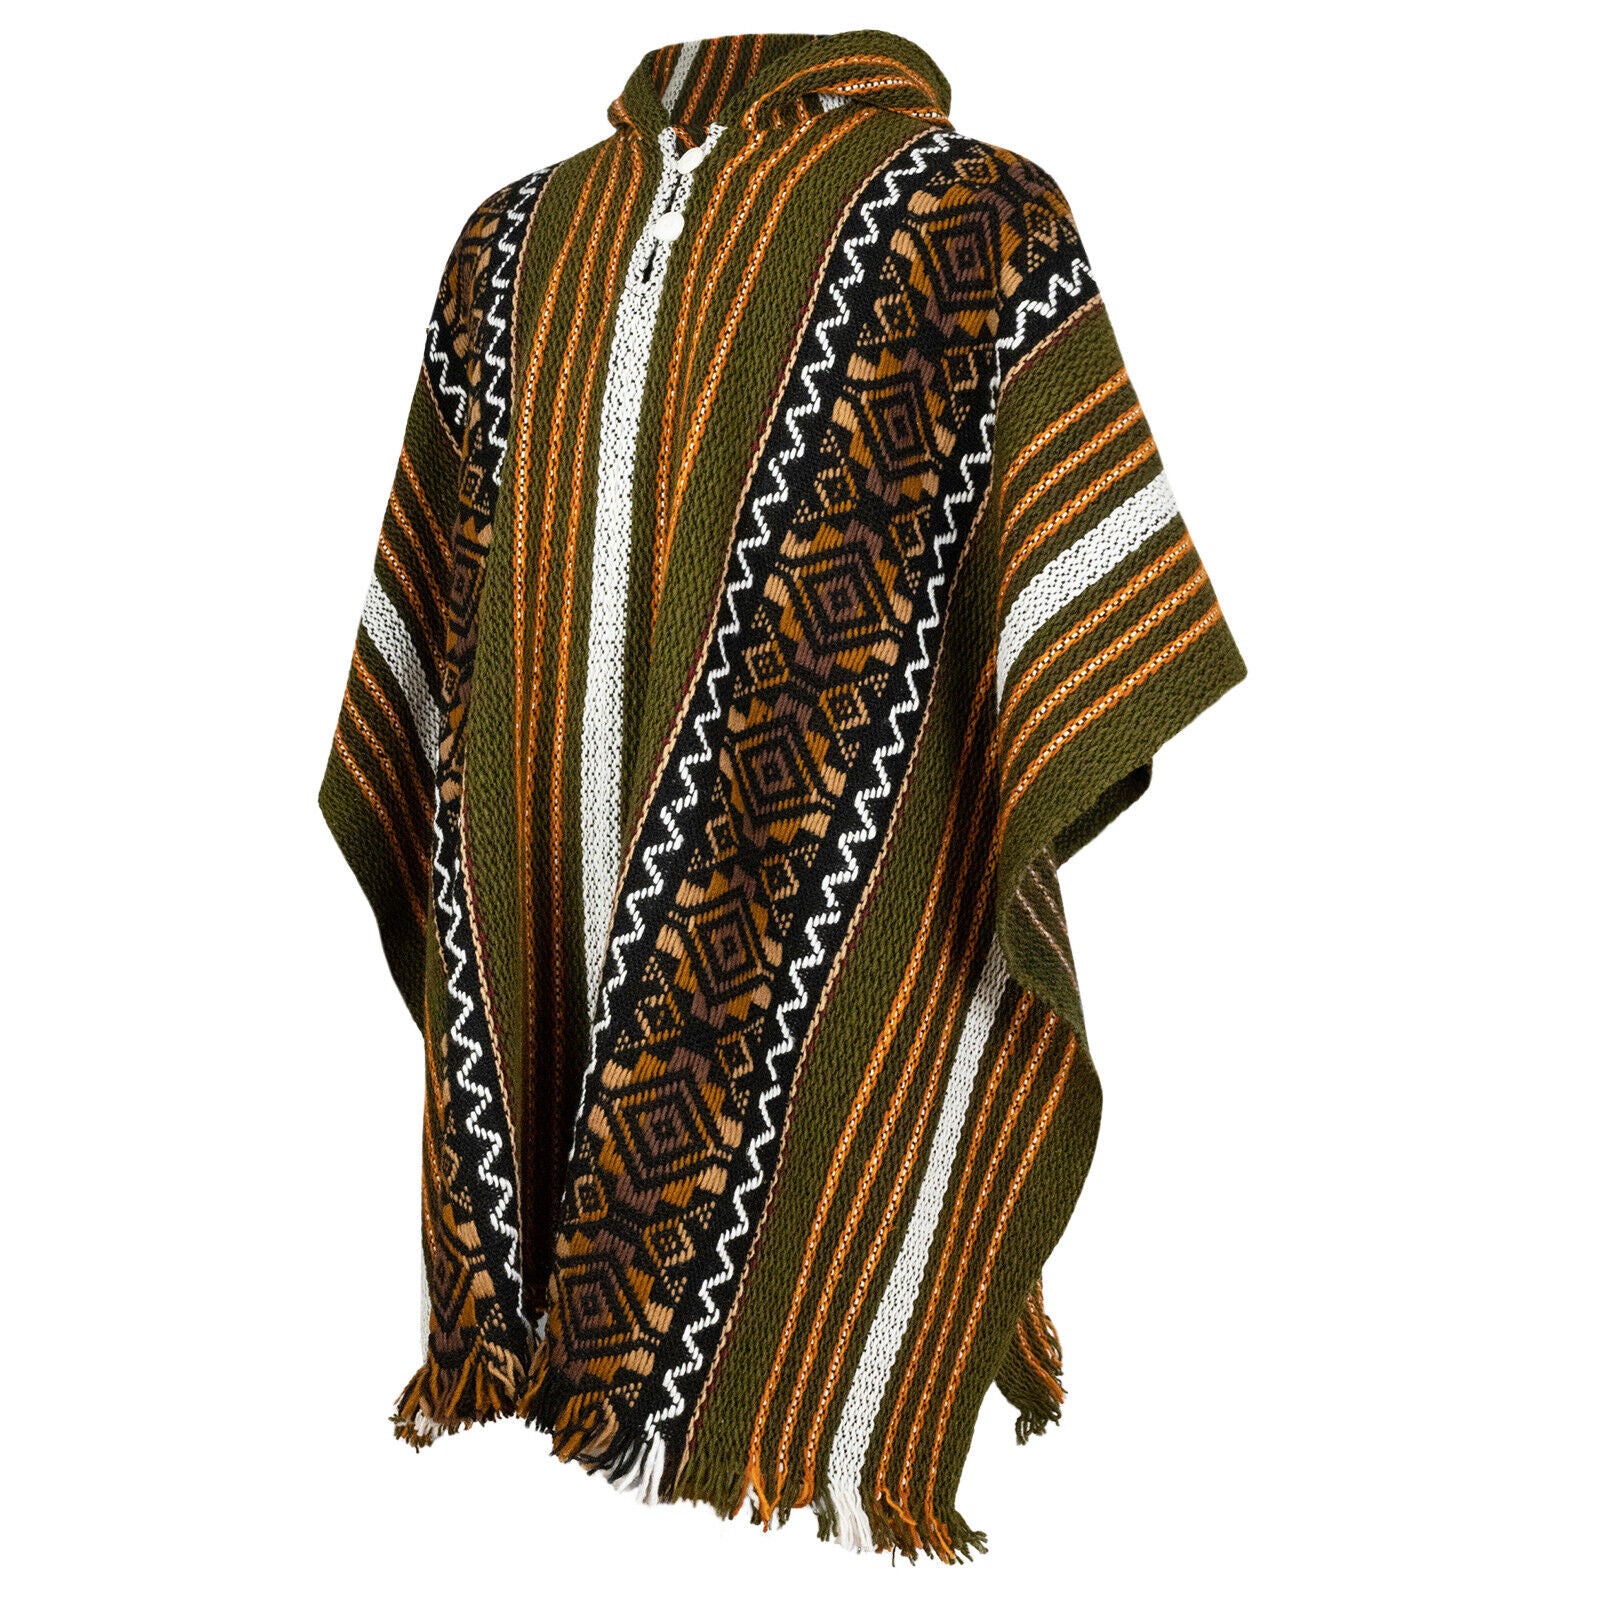 Sozoranga - Llama Wool Unisex South American Handwoven Hooded Poncho - khaki green/orange/off-white stripes with diamonds pattern